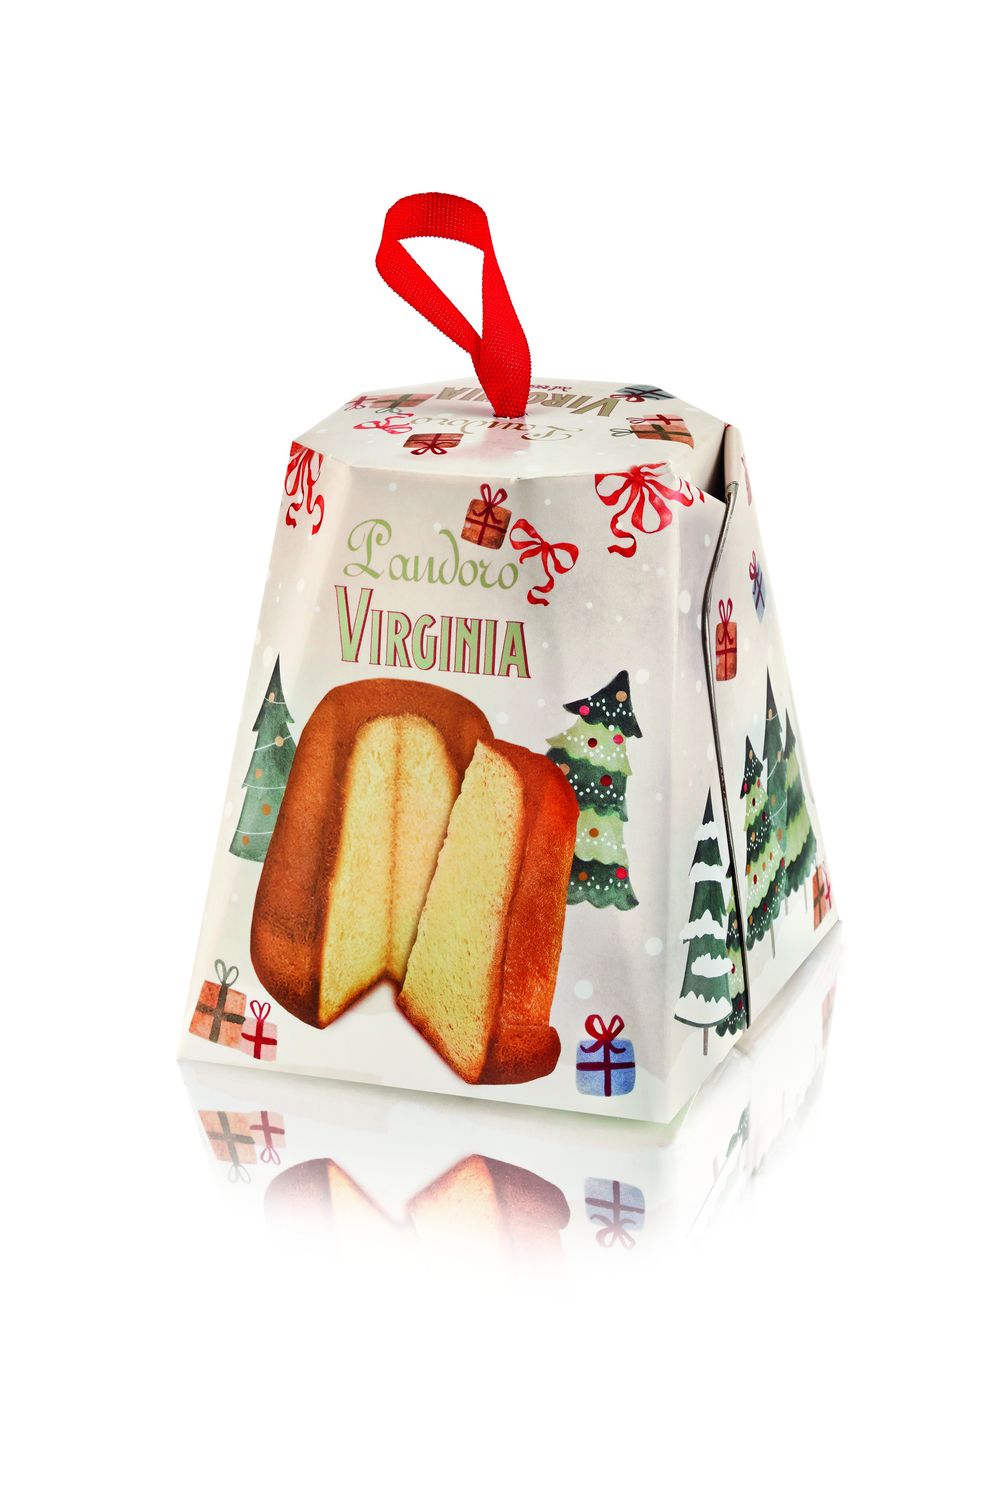 Mini Pandoro - White Christmas Box